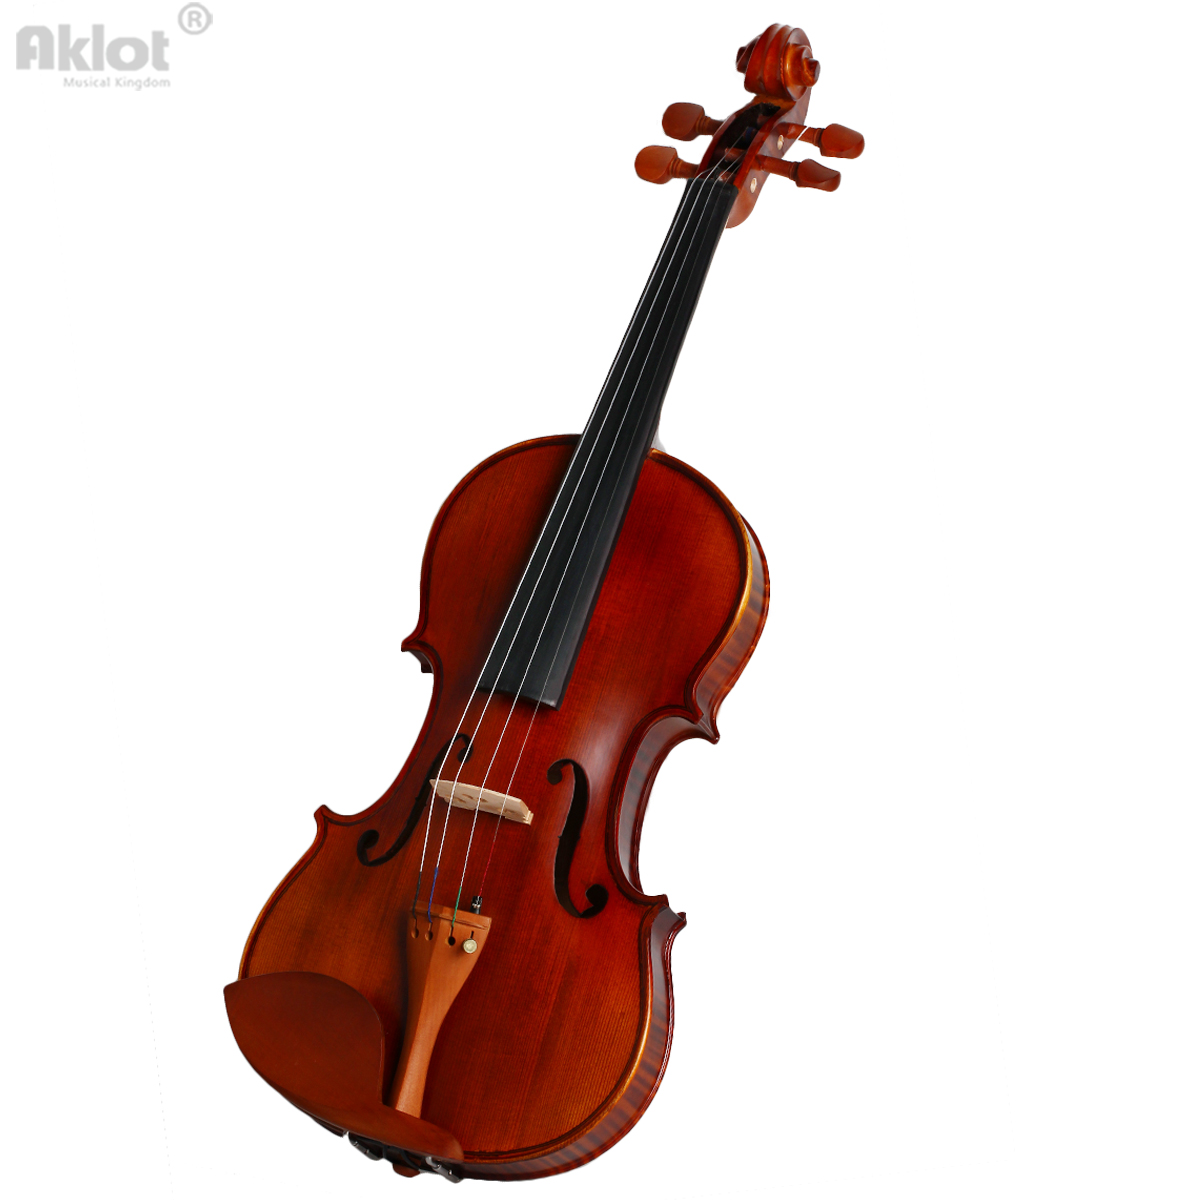 Aklot Violin 4/4 Full Size Fiddle Antique Natural Acoustic Solid 